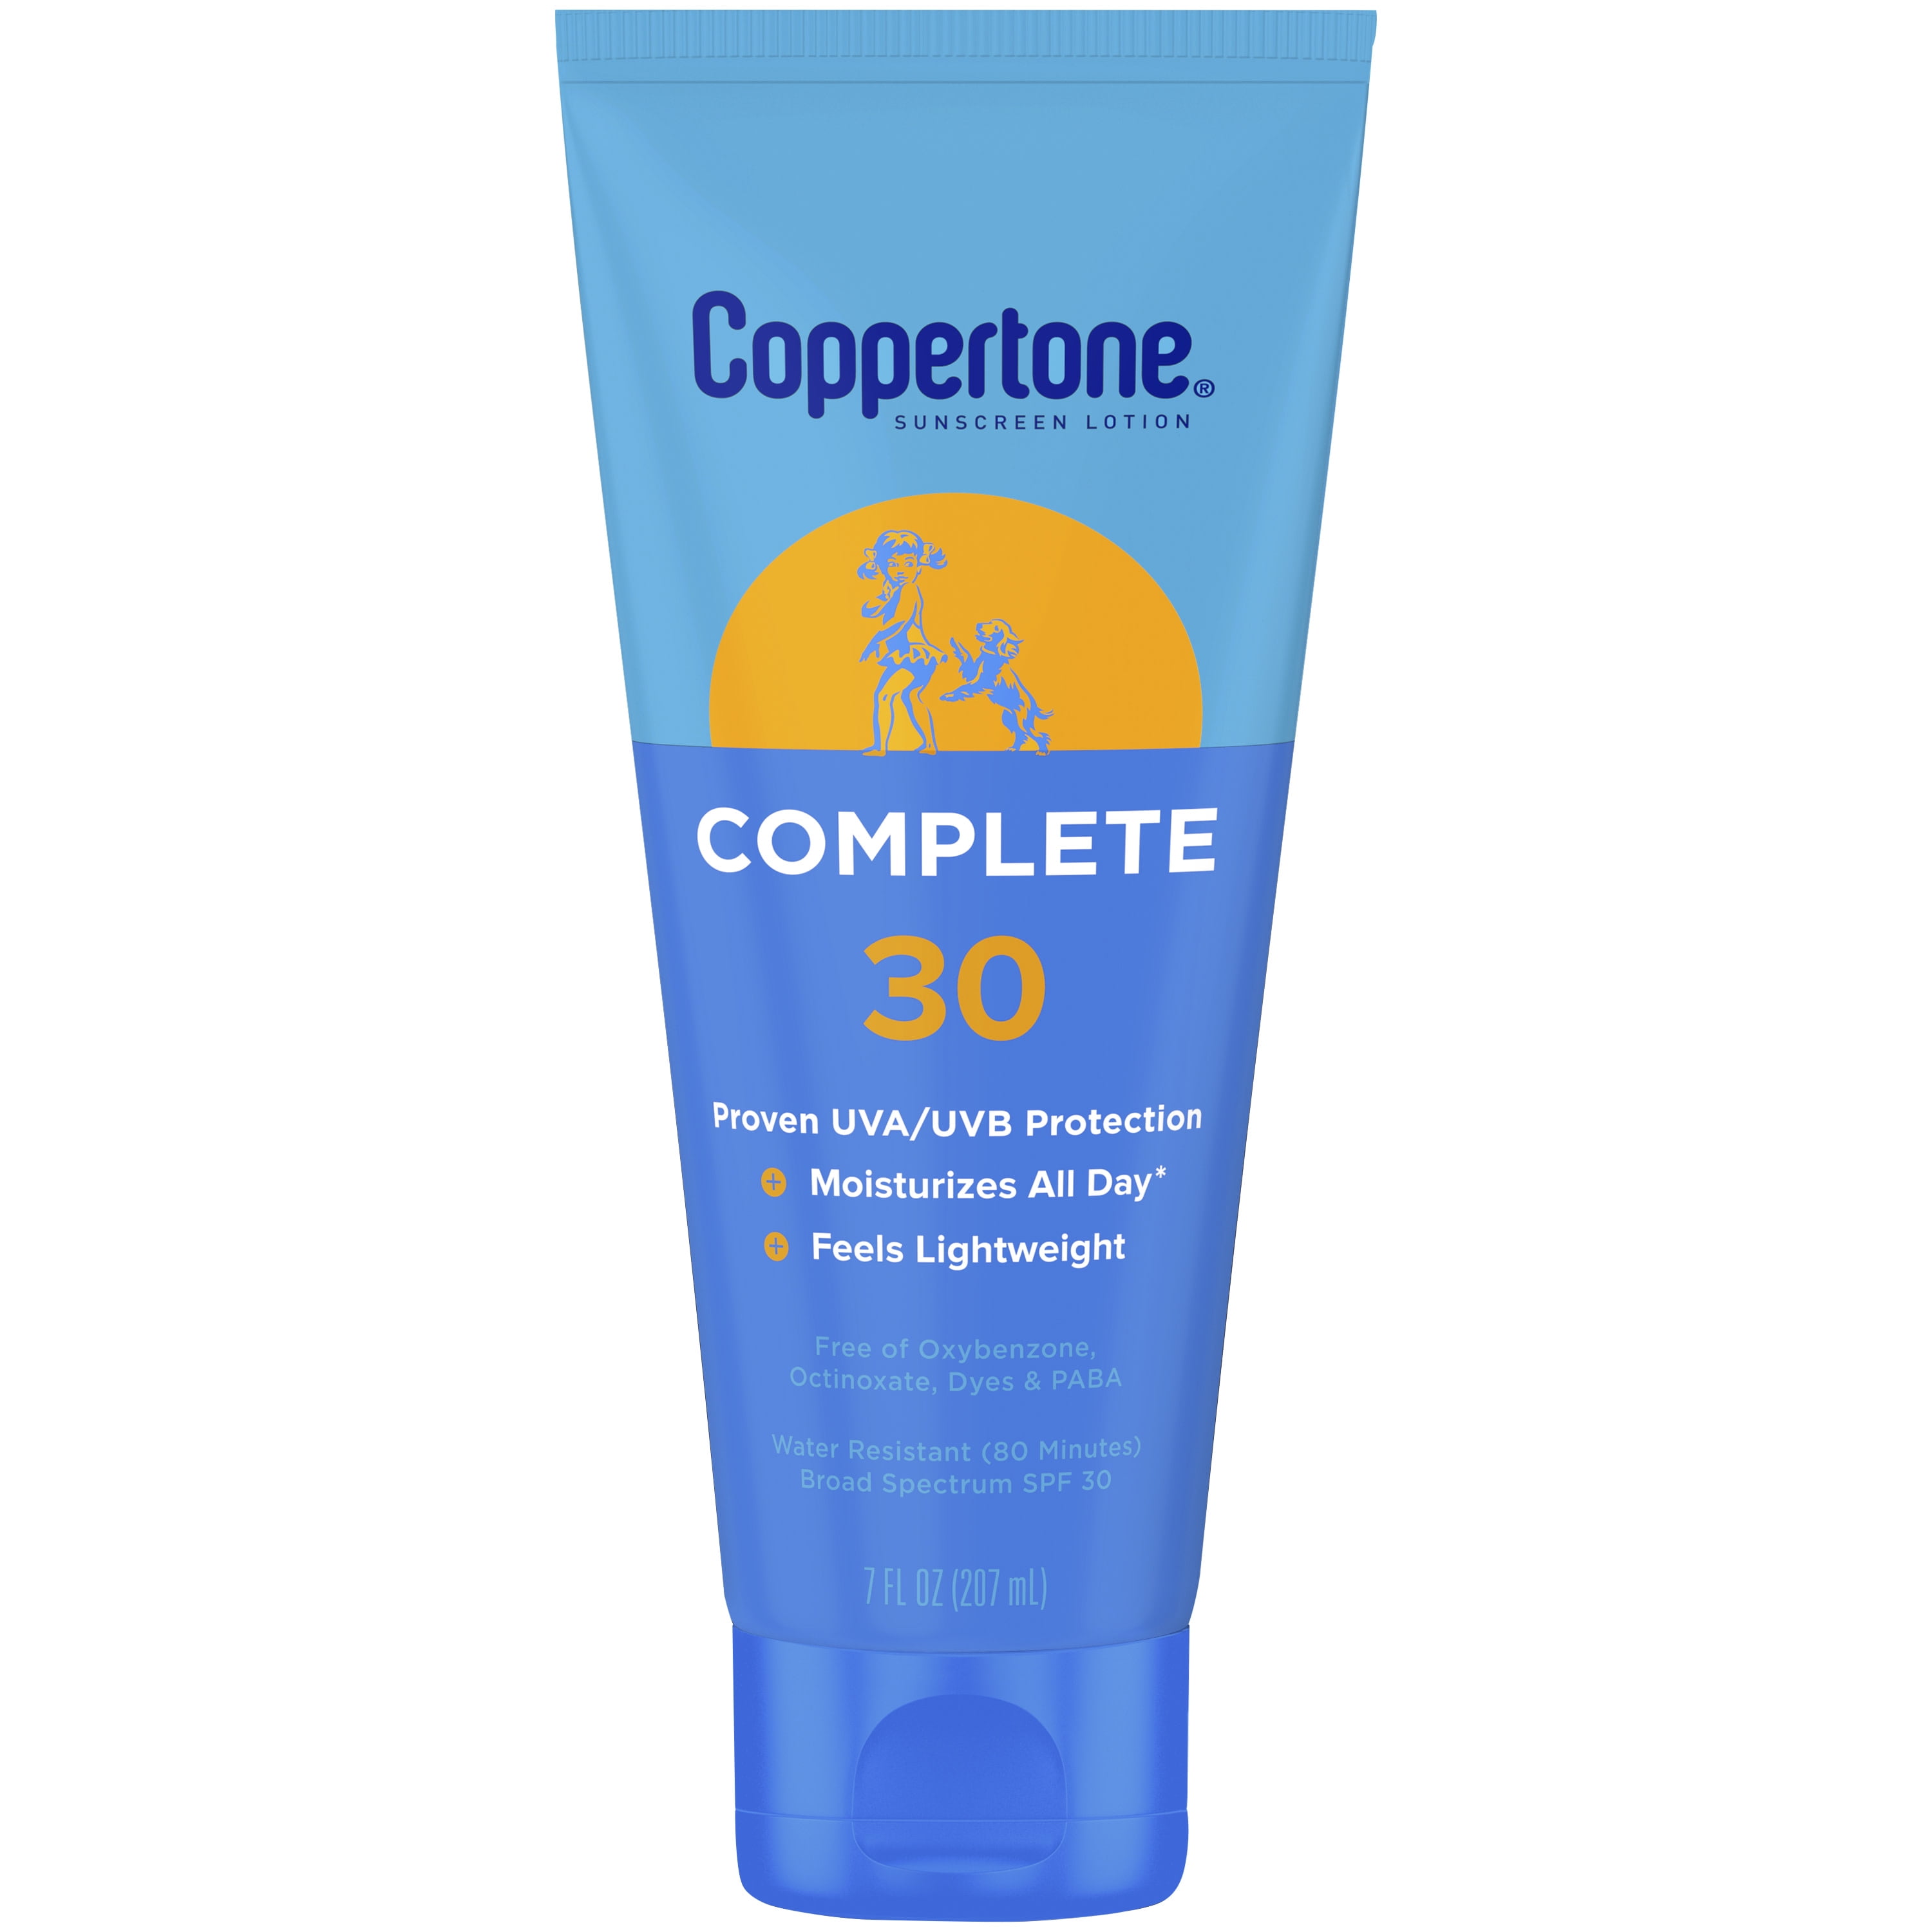 Coppertone Complete Sunscreen Lotion, SPF 30 Sunscreen, 7 Oz